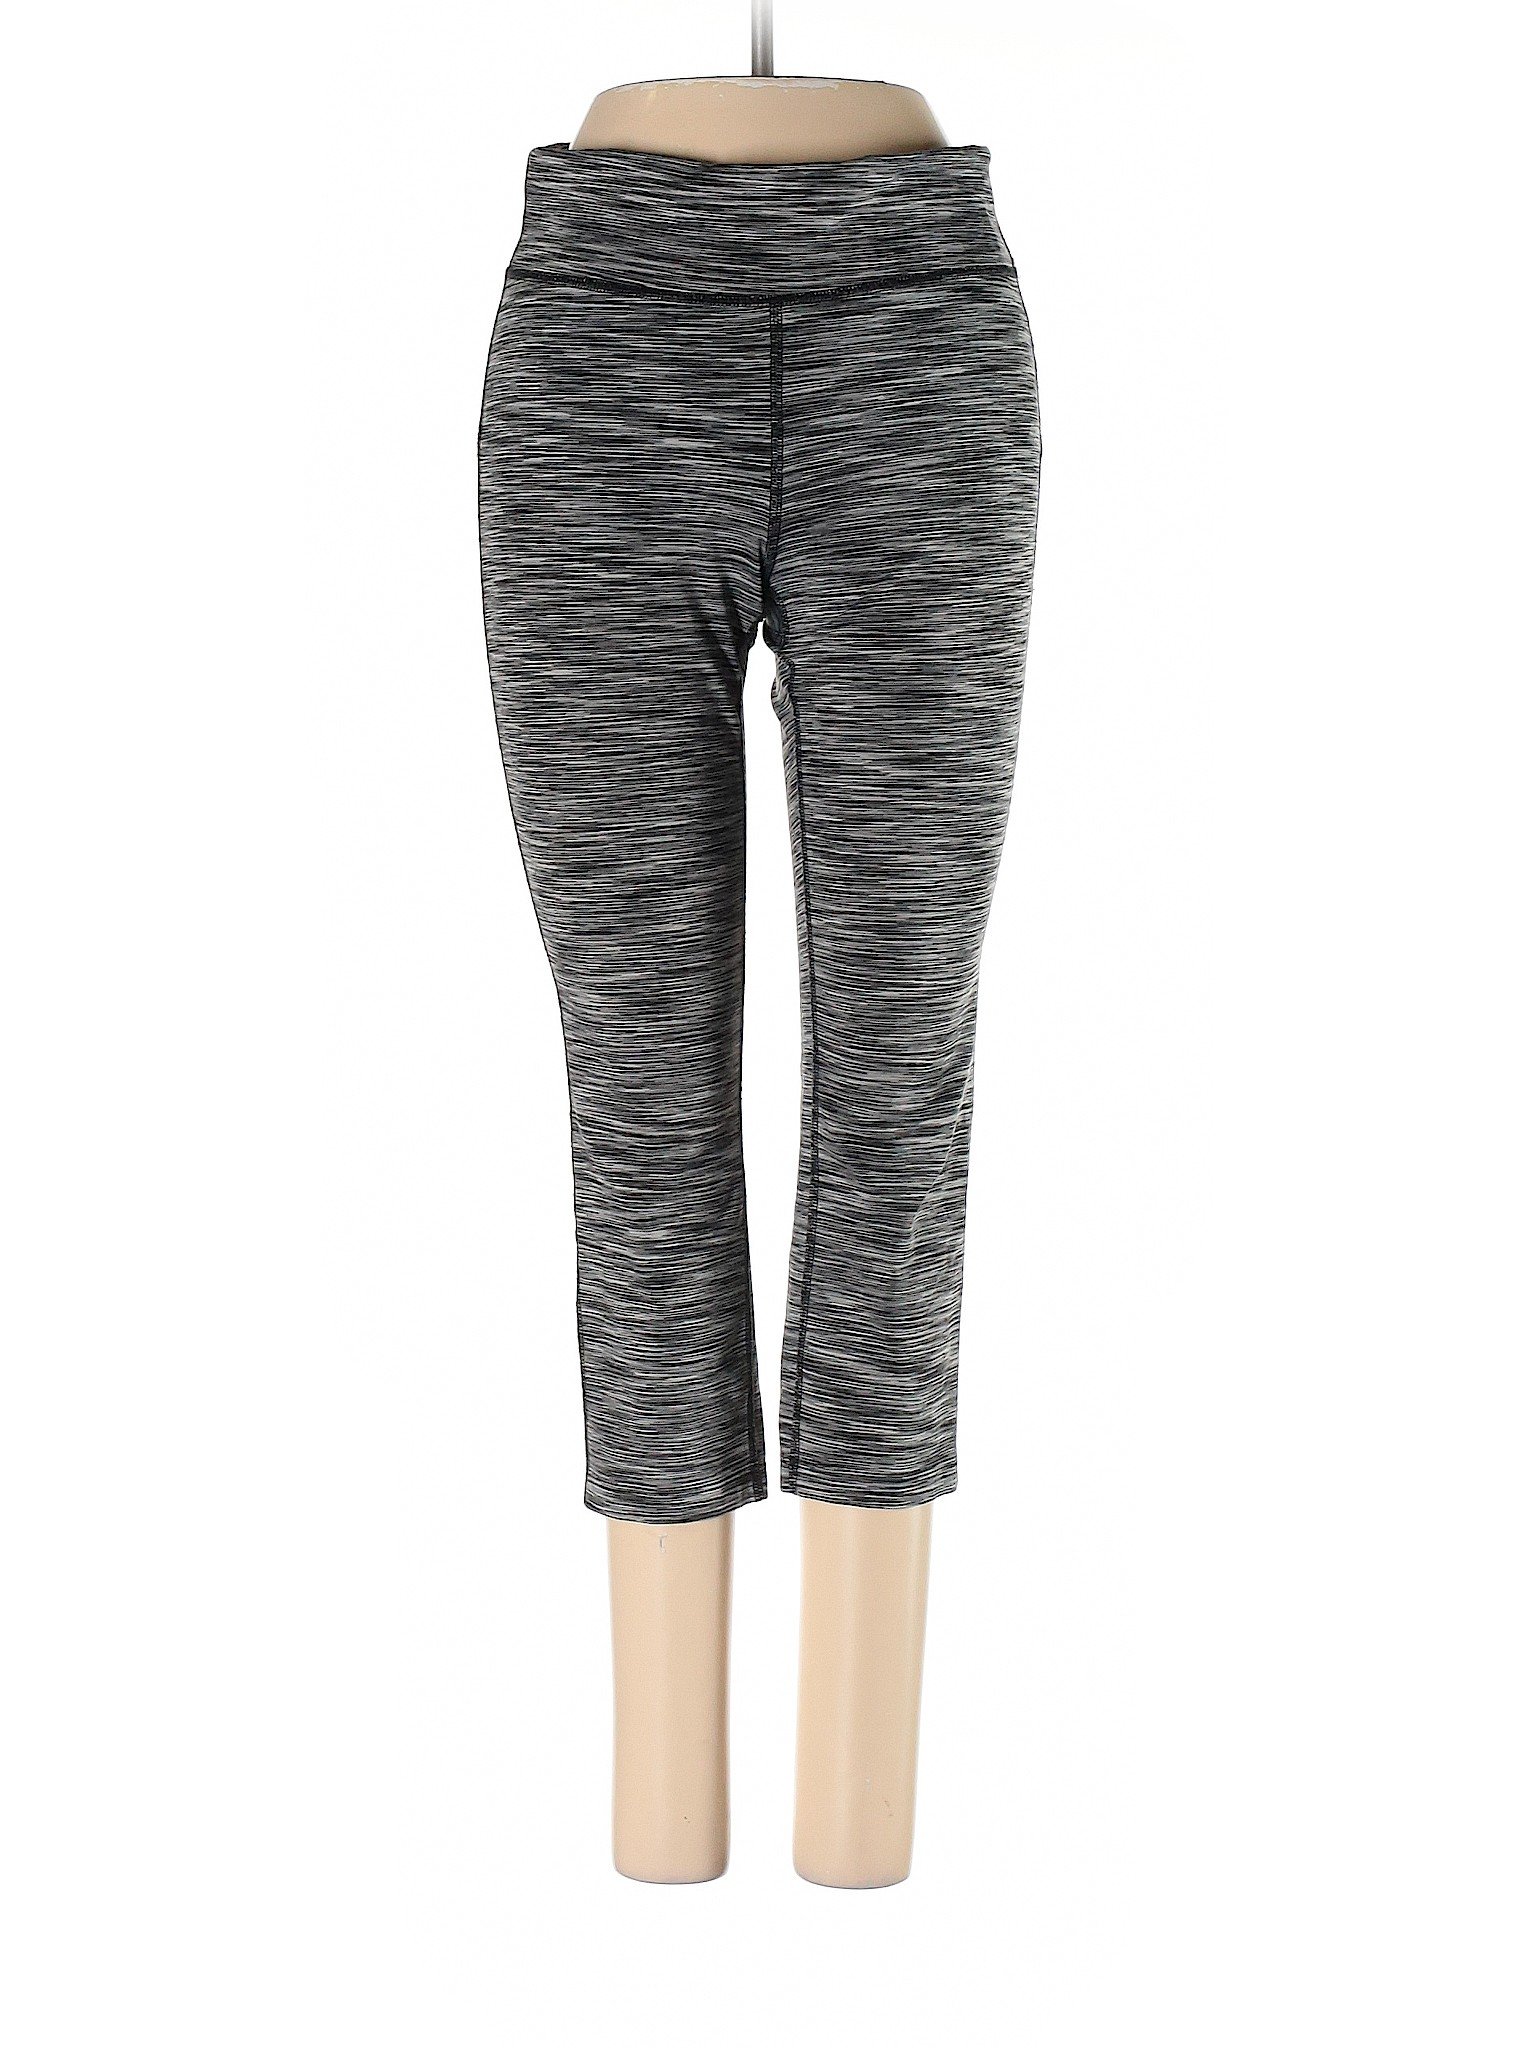 Xersion Women Gray Active Pants S | eBay